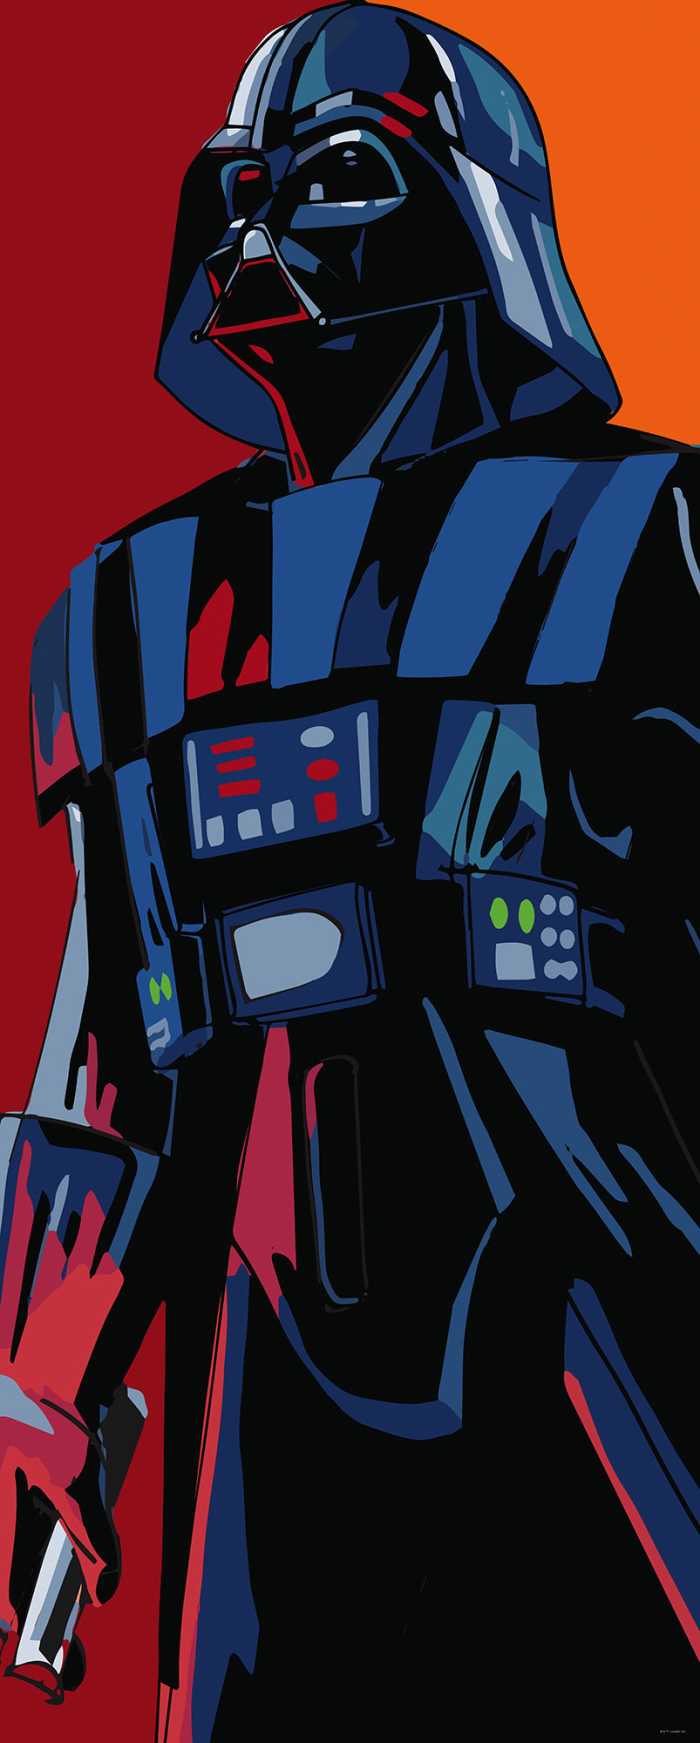 Digital wallpaper Star Wars Cyberart by Vader